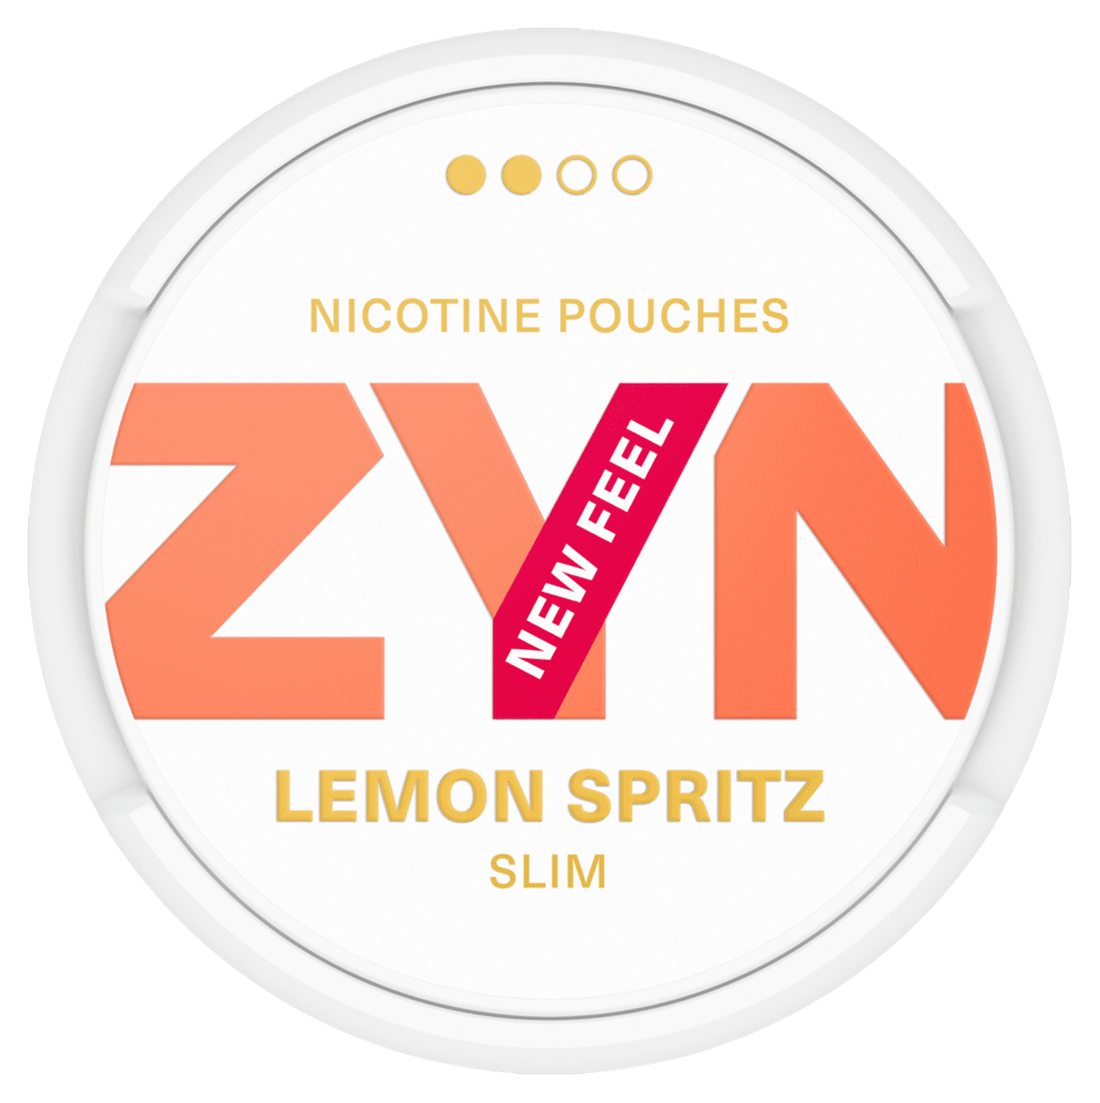 ZYN Lemon Spritz Slim Sacchetti di nicotina